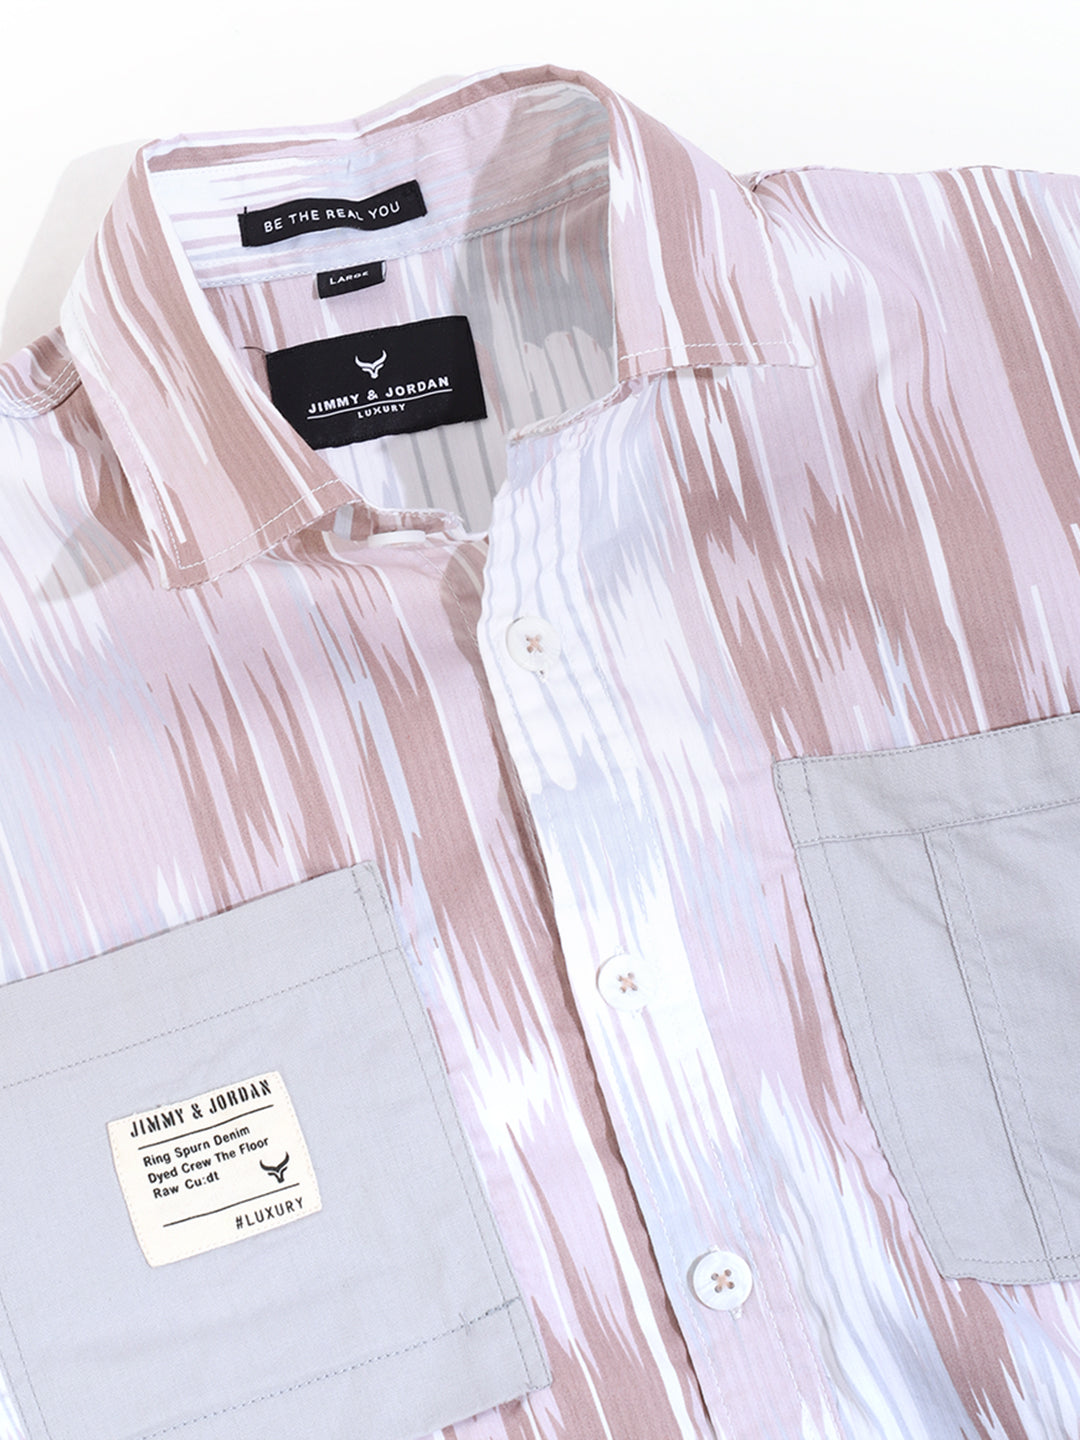 Peach Canvas Lace Print Half Sleeve Shirt